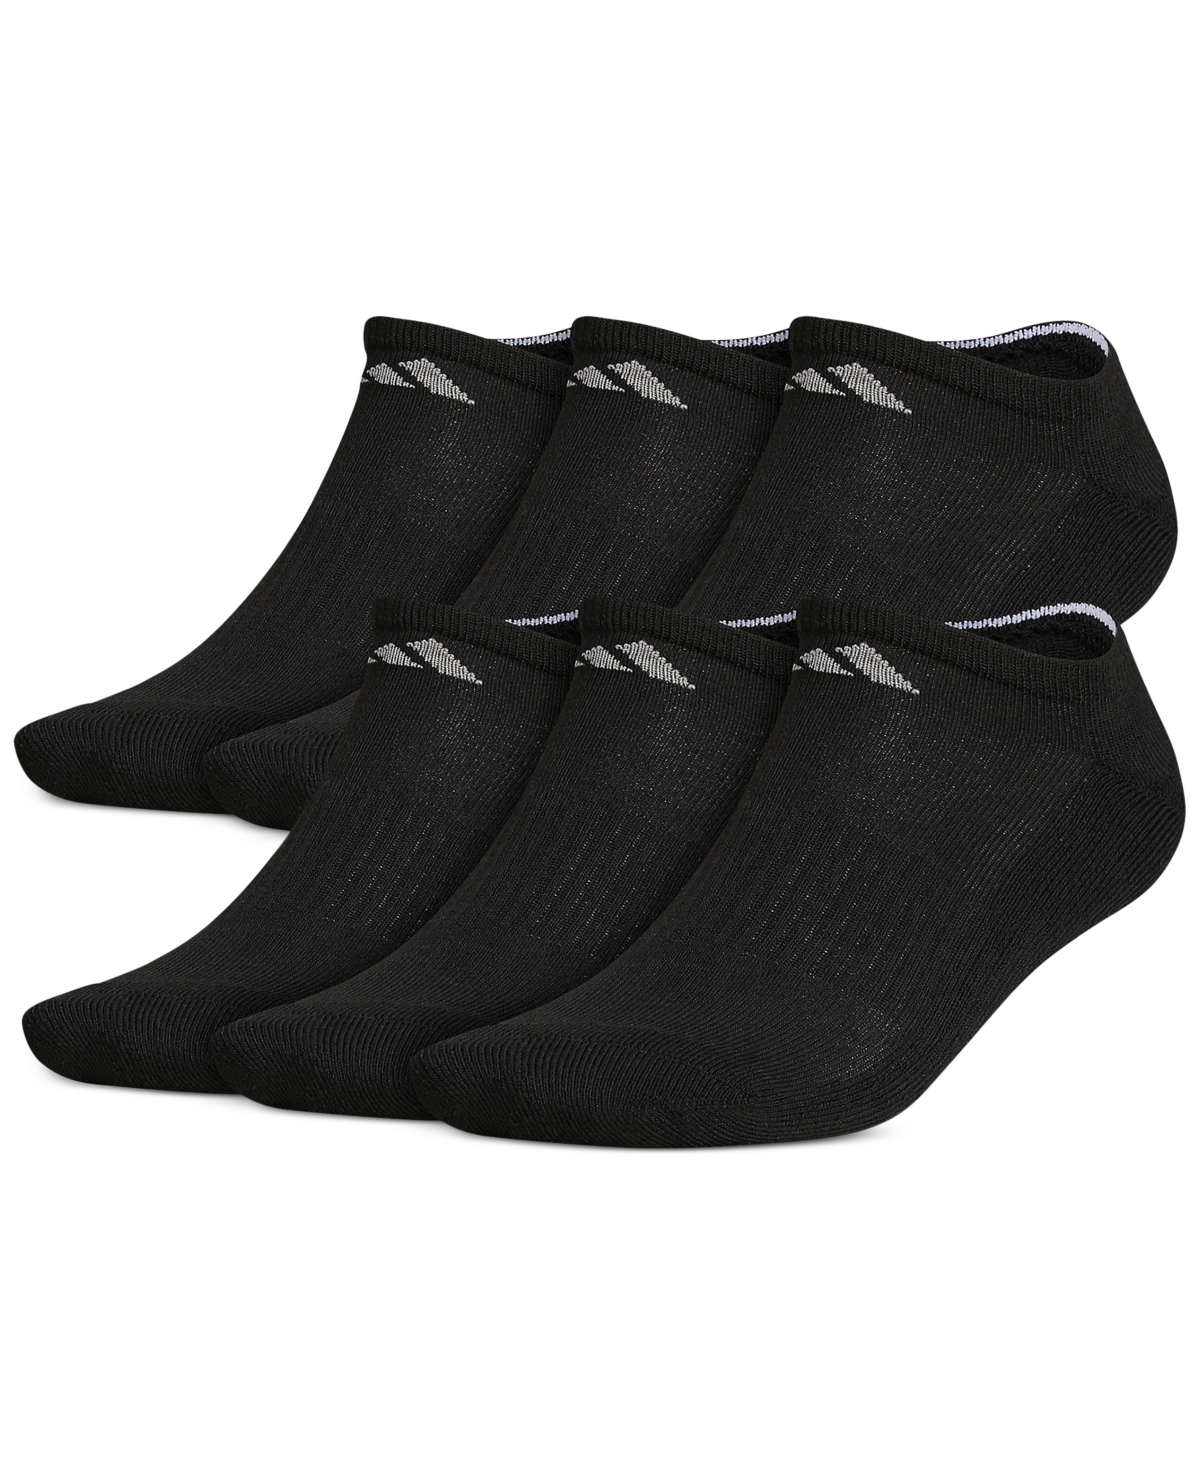 Men's No-Show Athletic Extended Size Socks, 6 Pack - Black